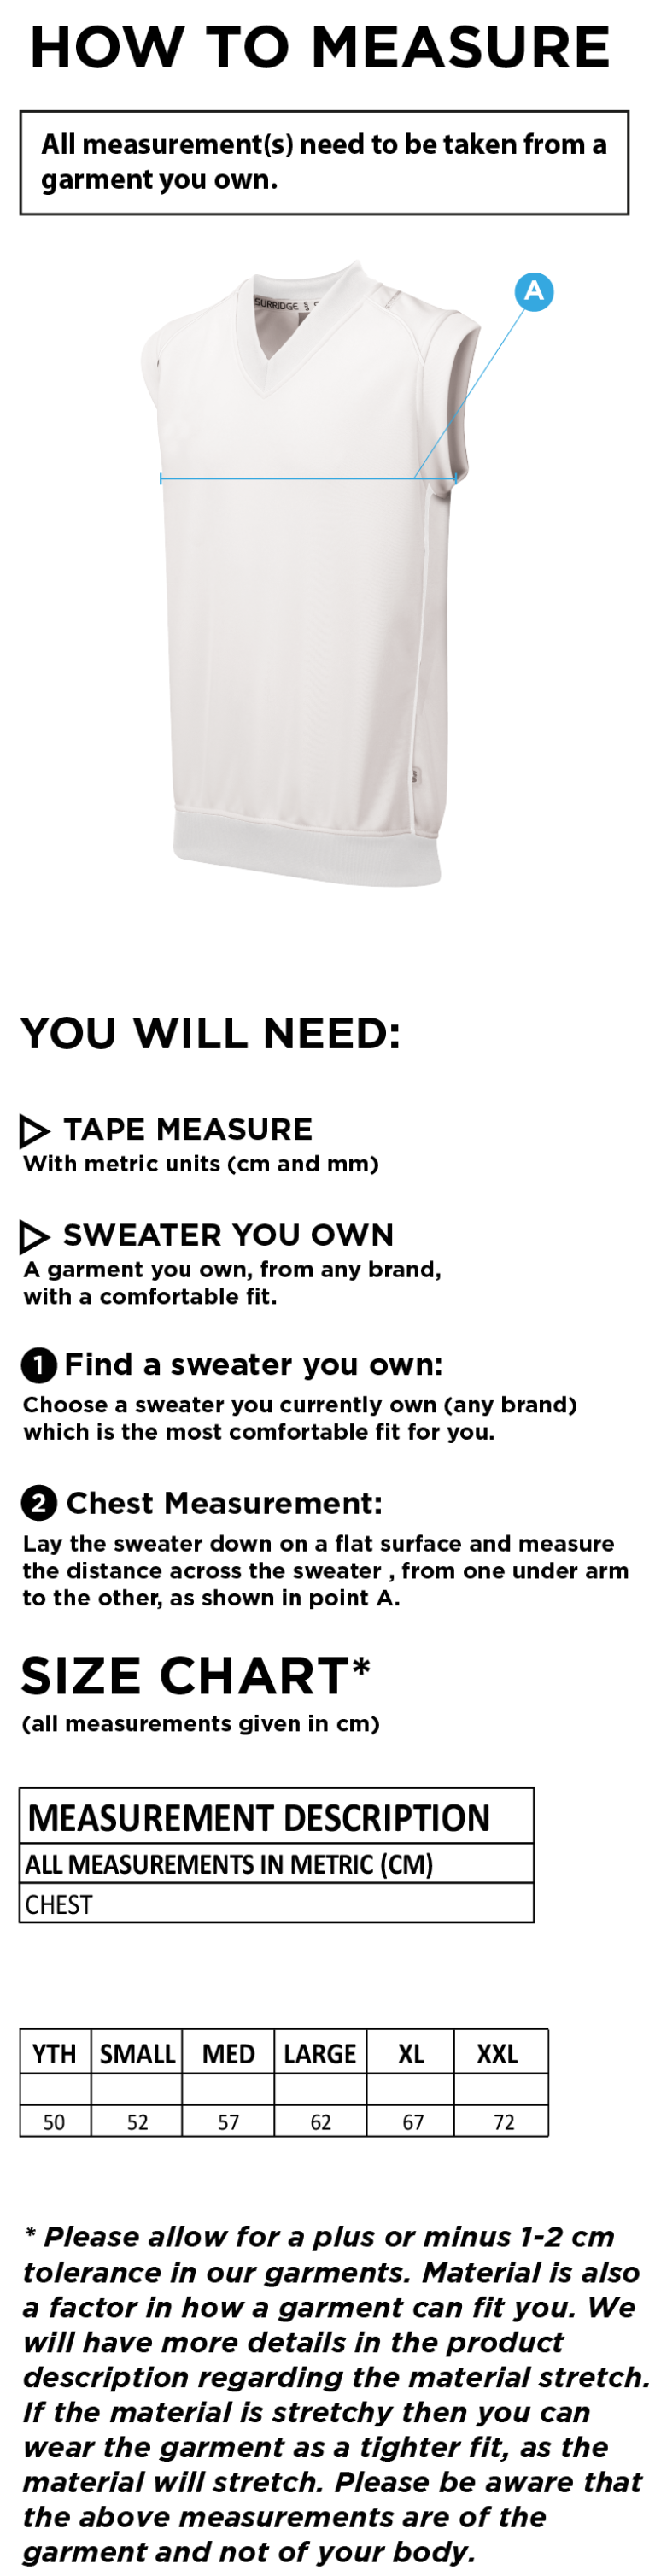 Cleckheaton CC - Ergo Sleeveless Sweater - Size Guide